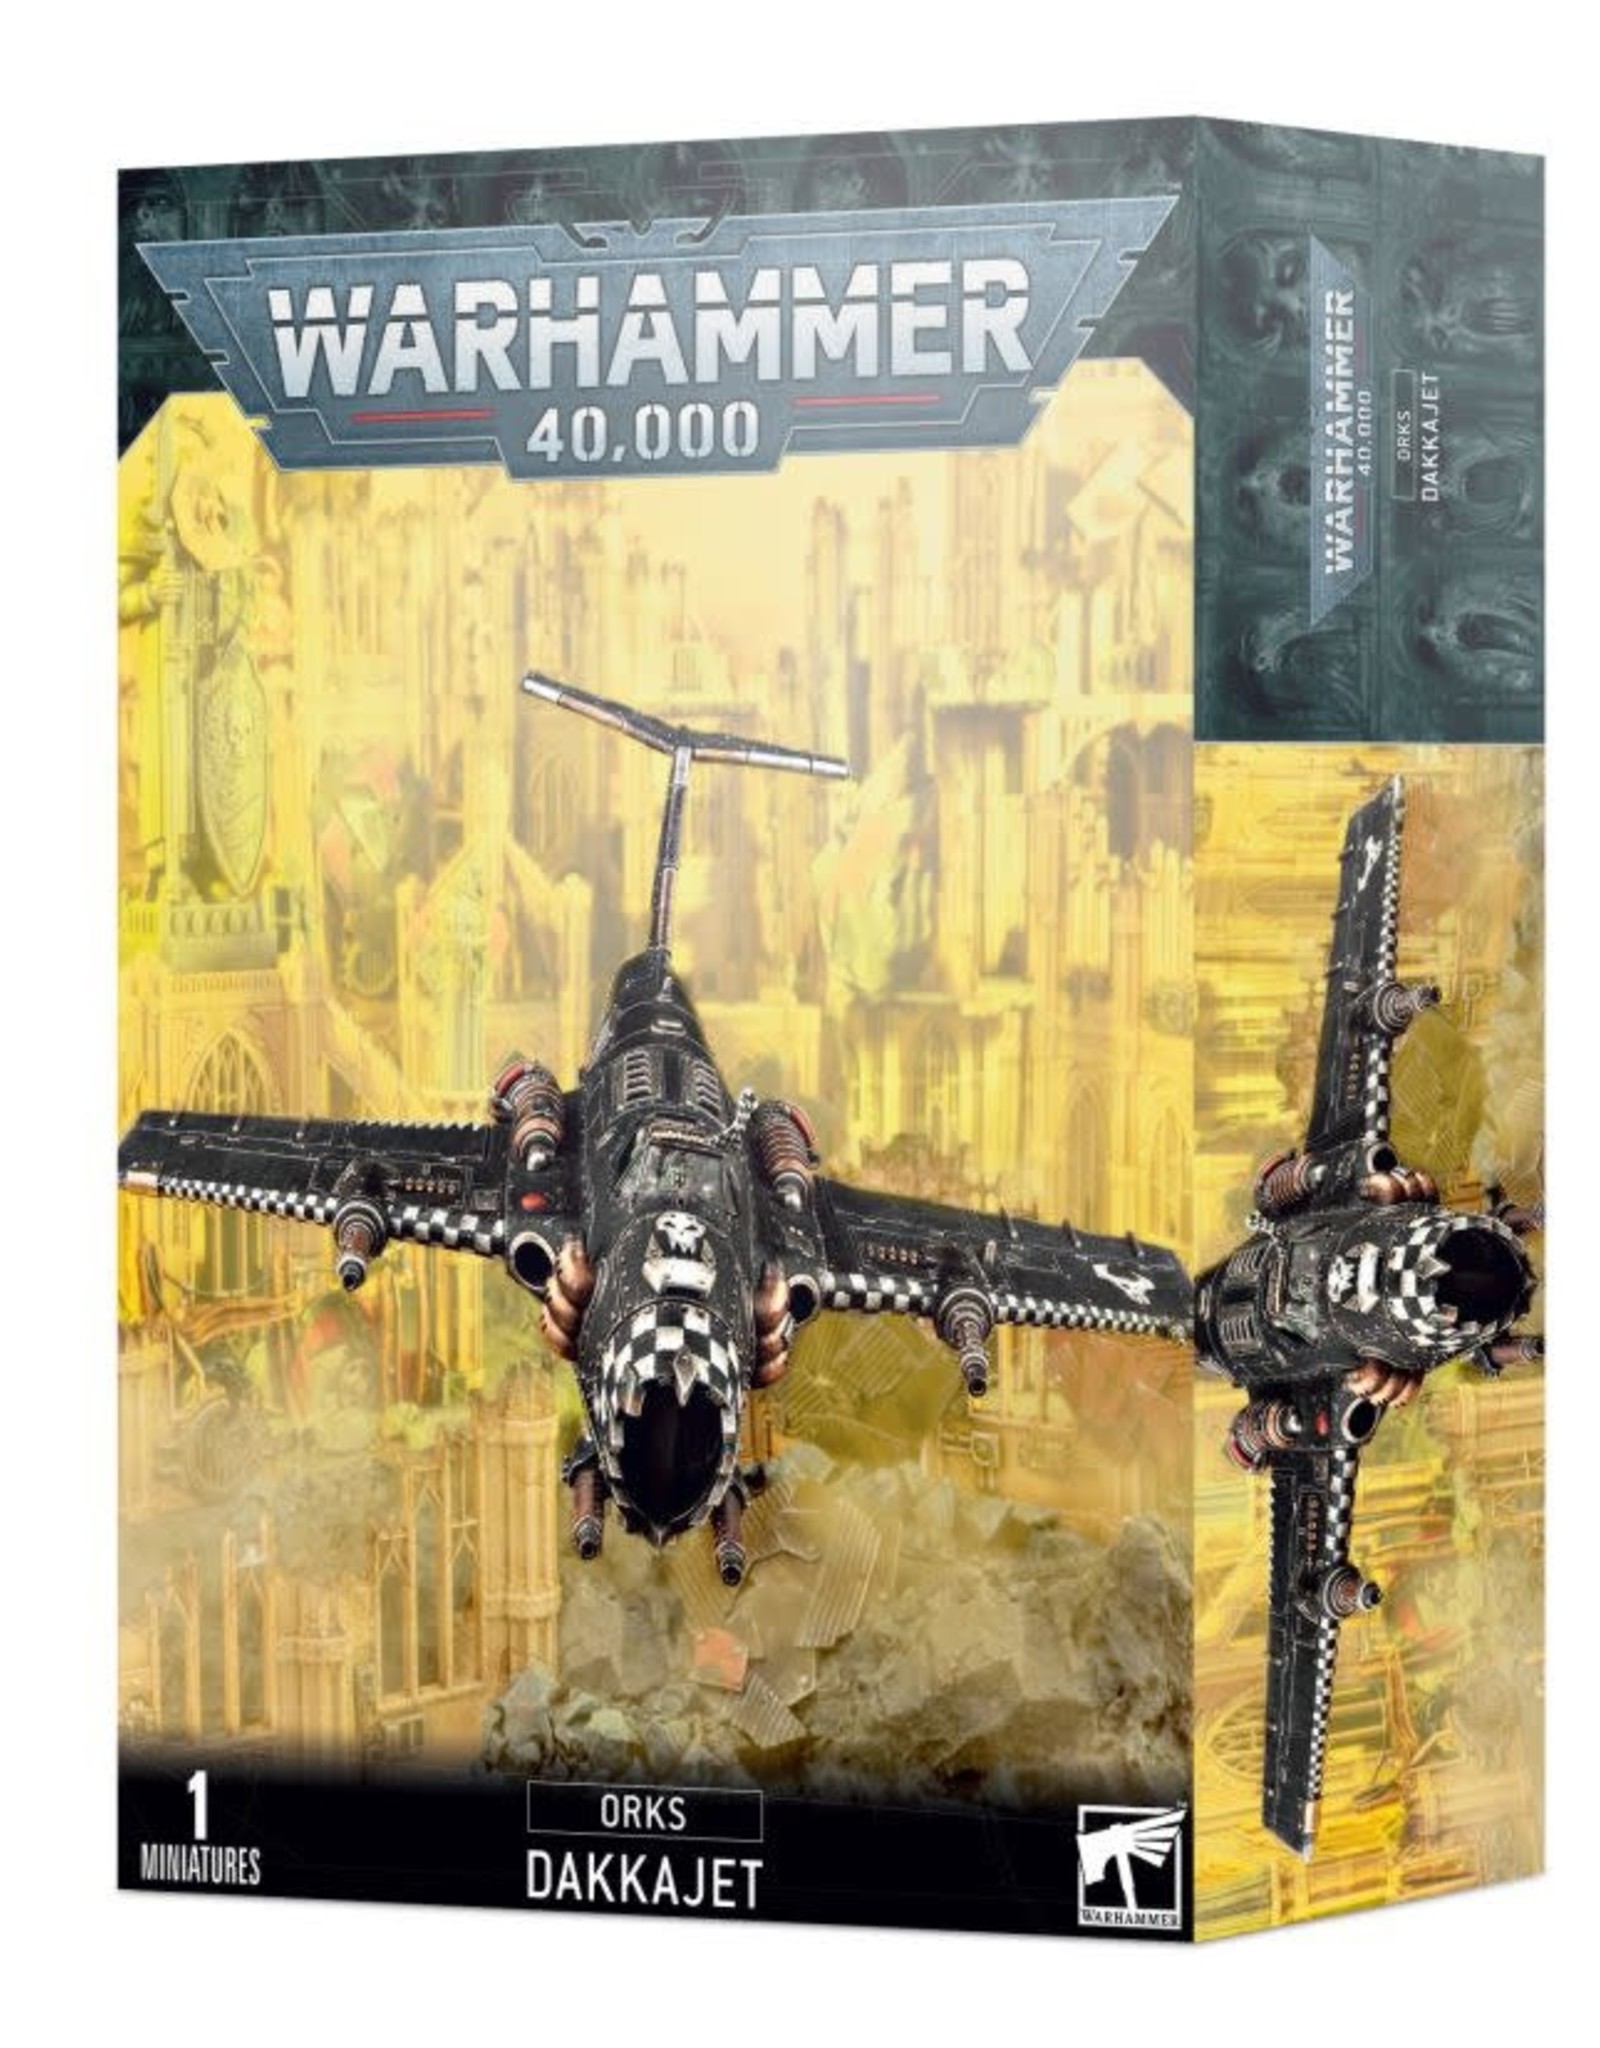 Warhammer 40k Dakkajet